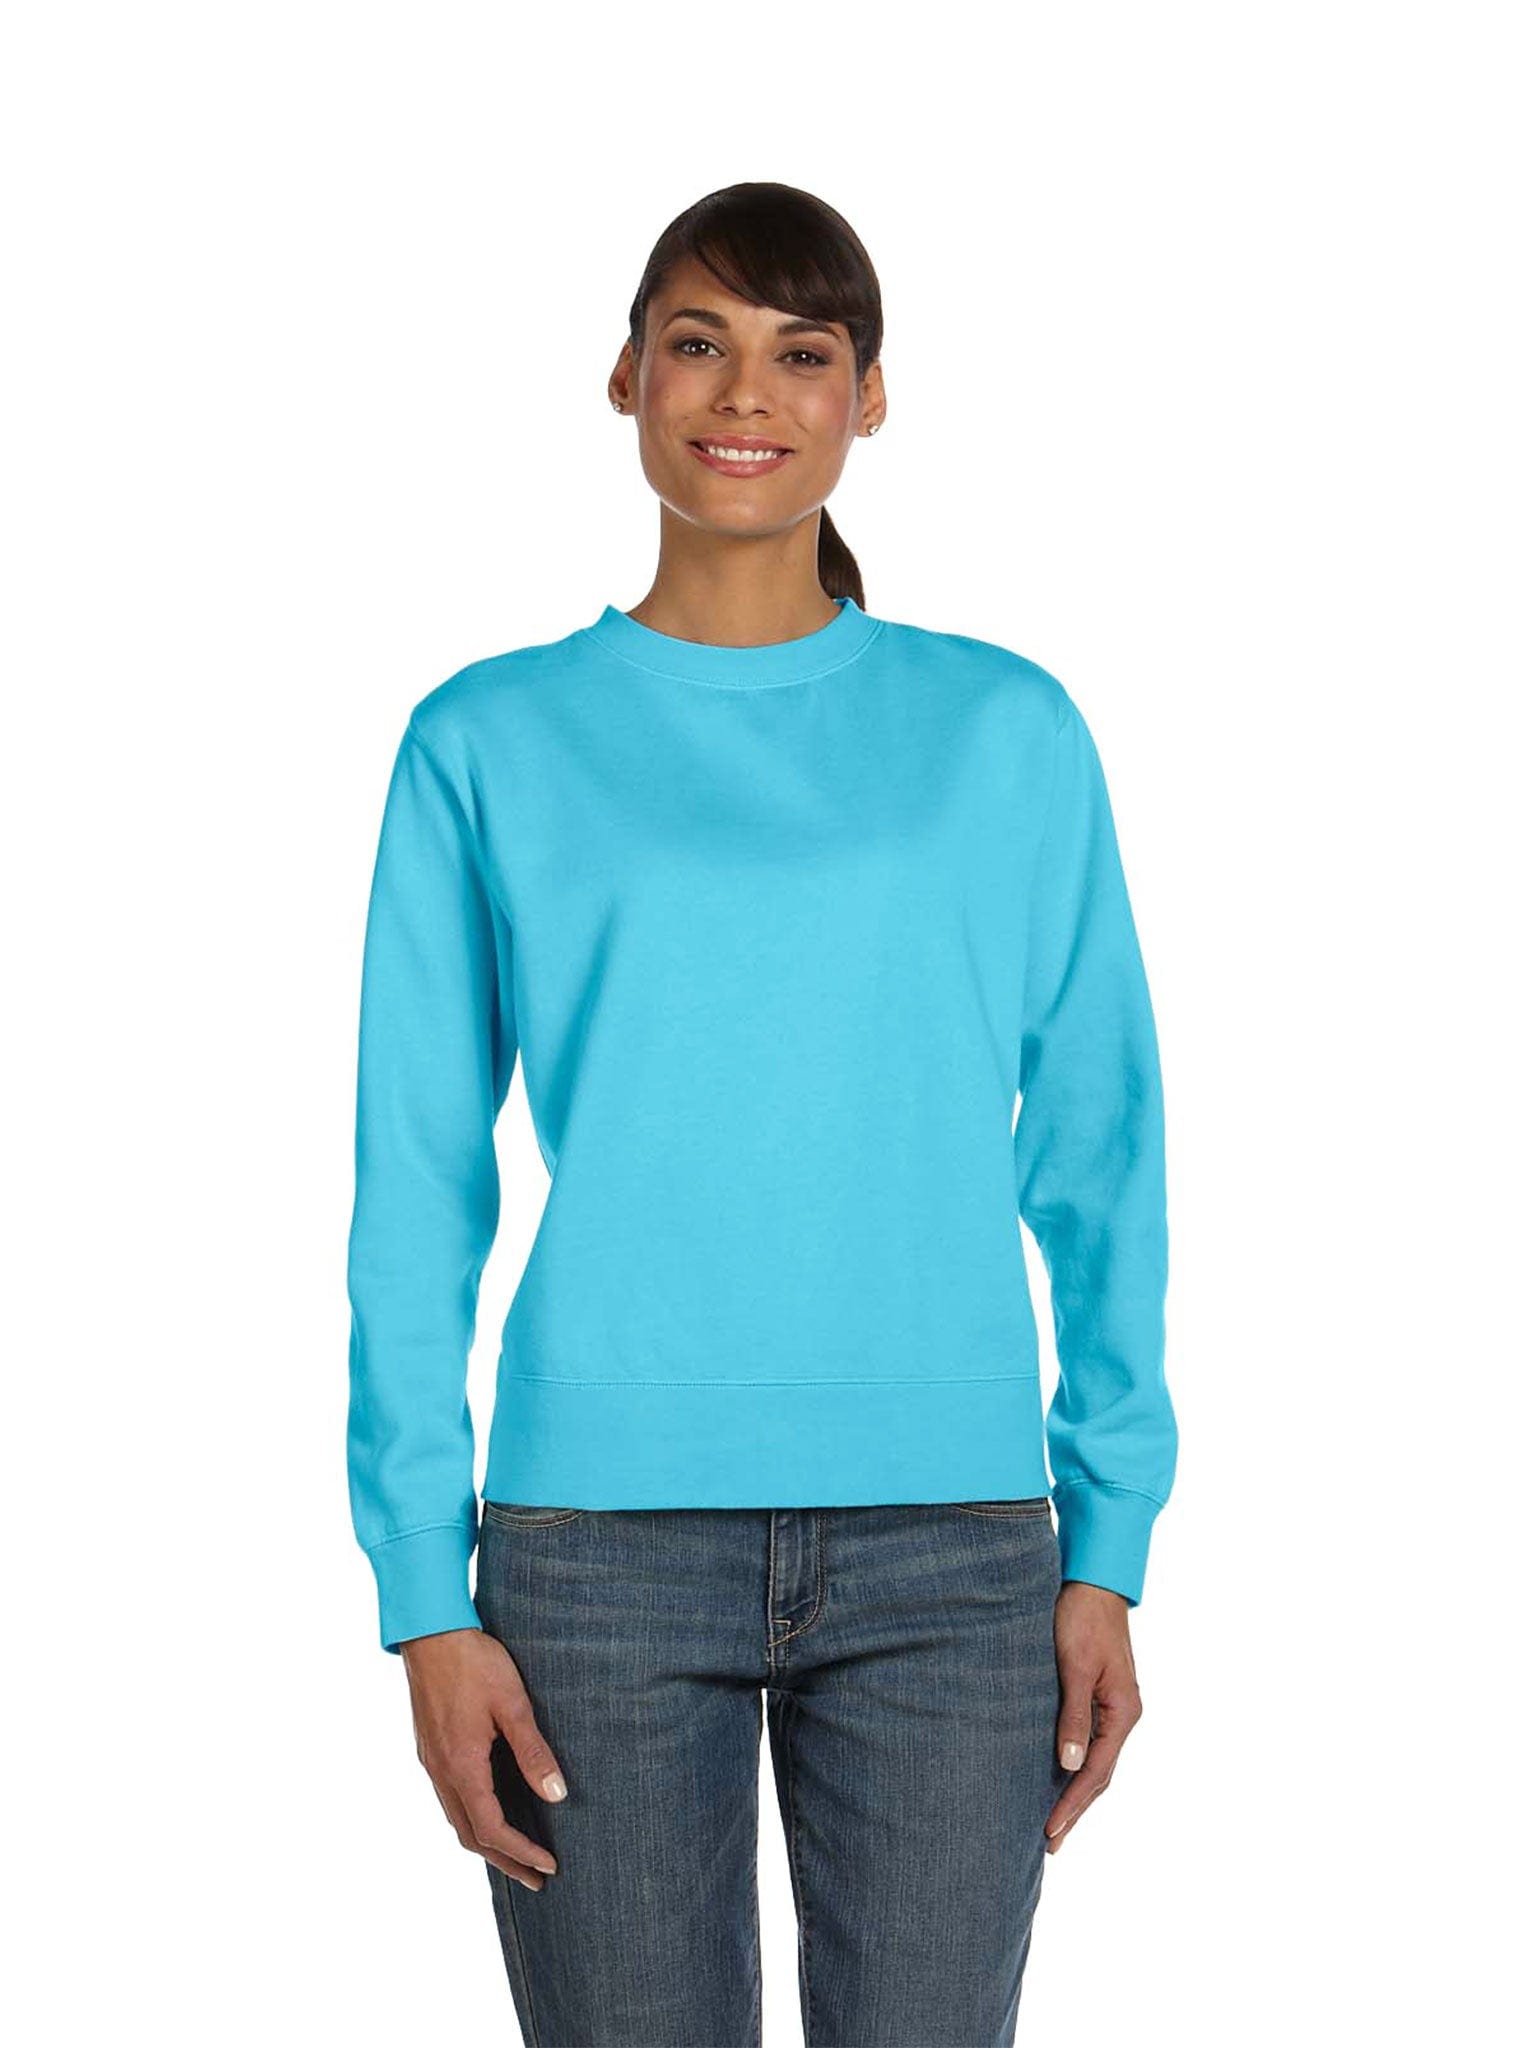 Bulk Order Garment Dyed Sweatshirt by Comfort Colors